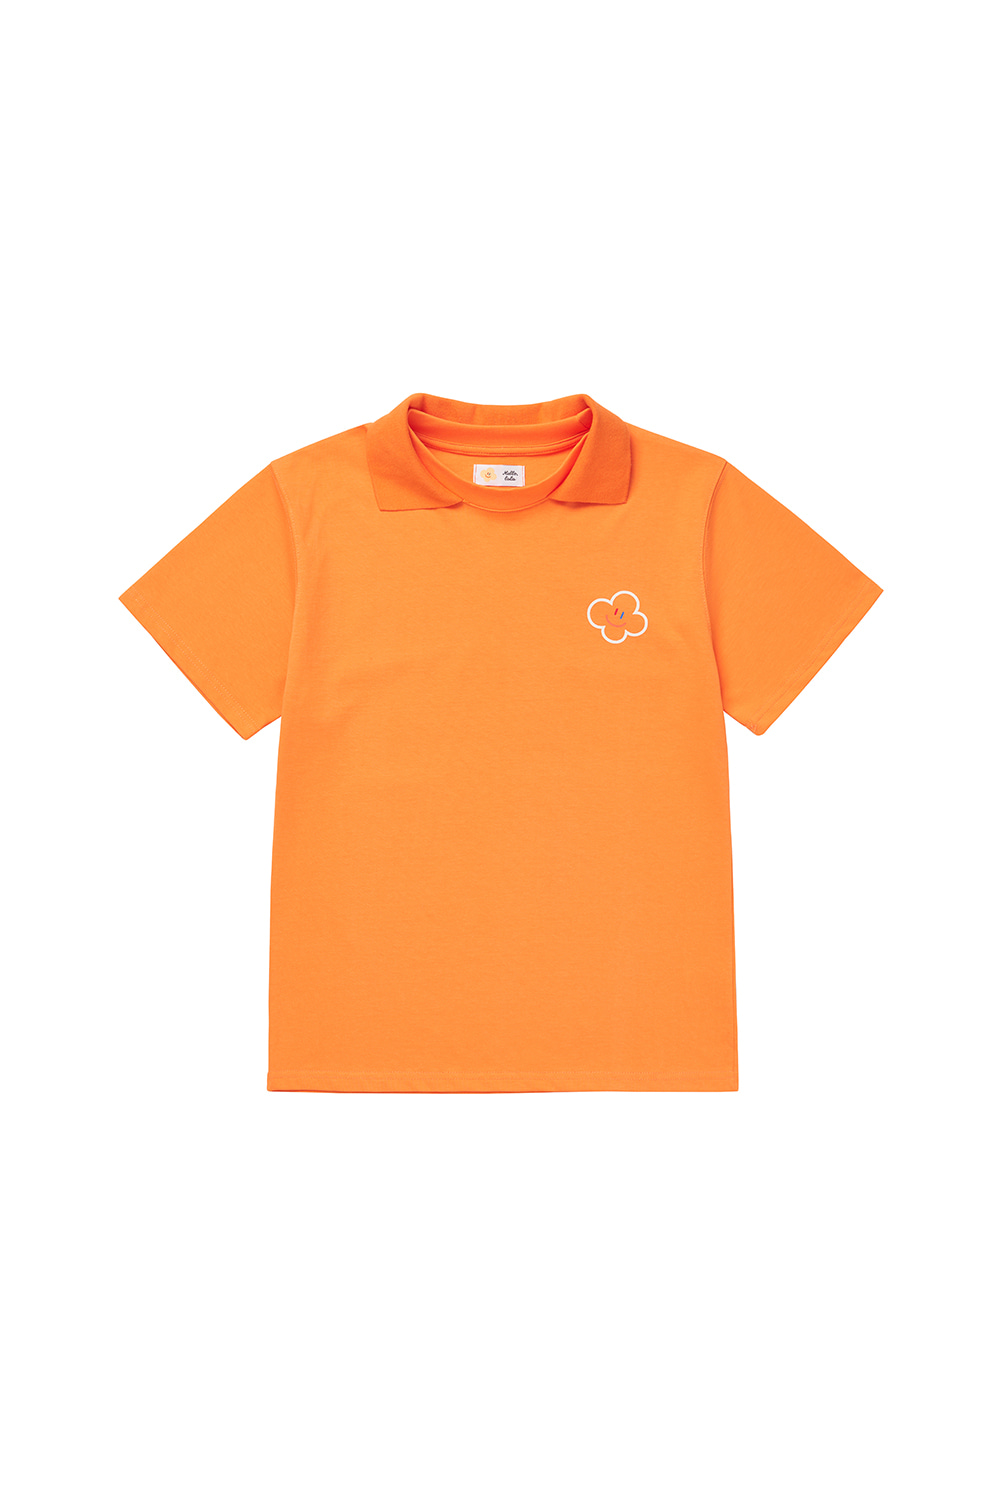 Hello LaLa New PK T-Shirts [Orange]